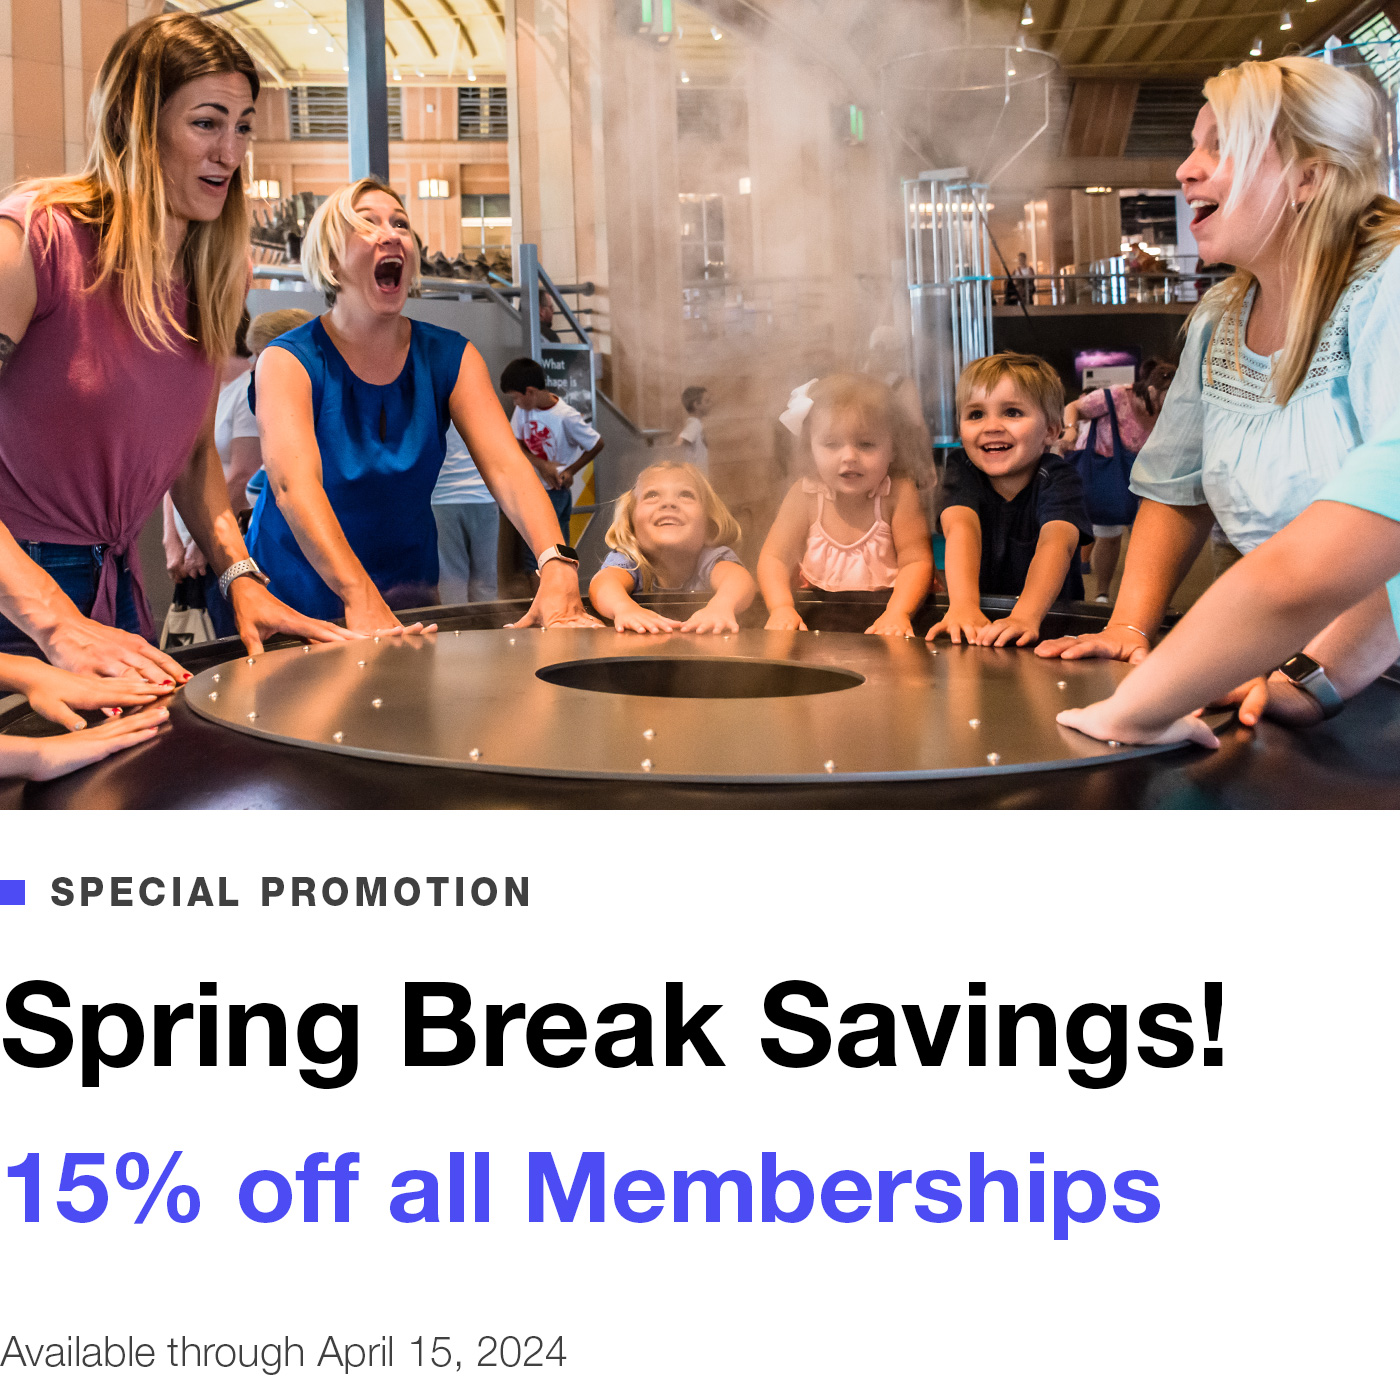 Spring Break Savings! 15% off all Memberships. Available through April 15, 2024